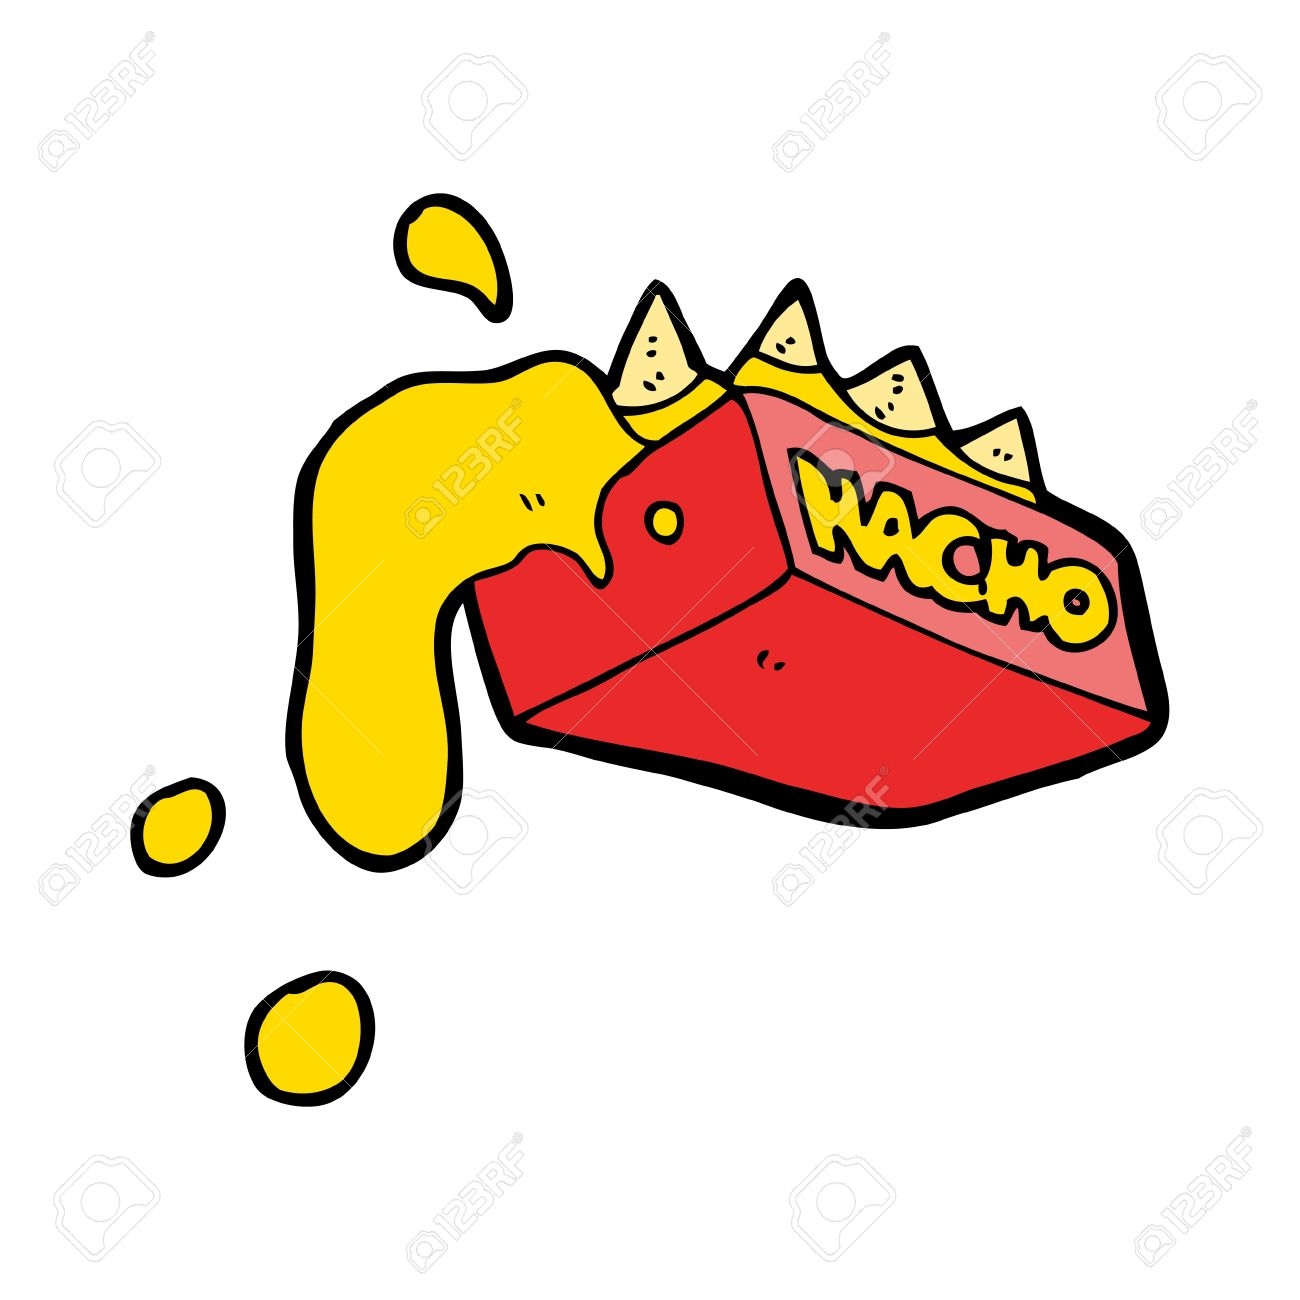 nachos: cartoon box of nachos